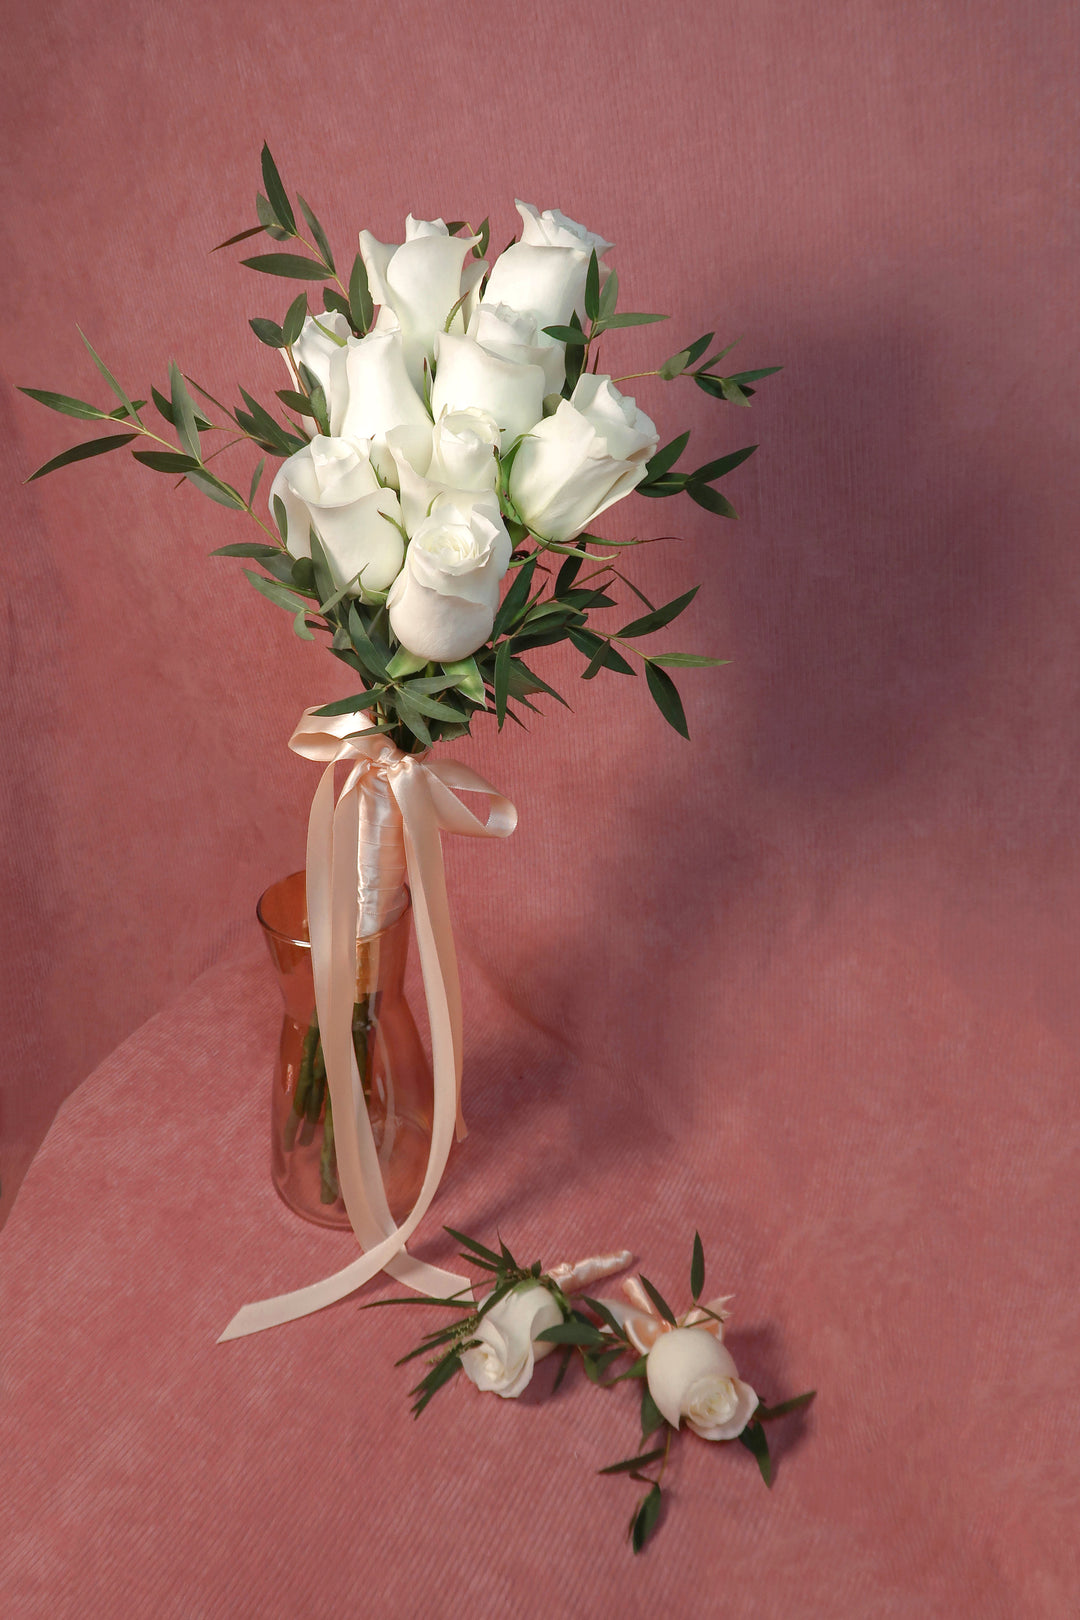 Bridal Bouquet - Pageant - White Roses